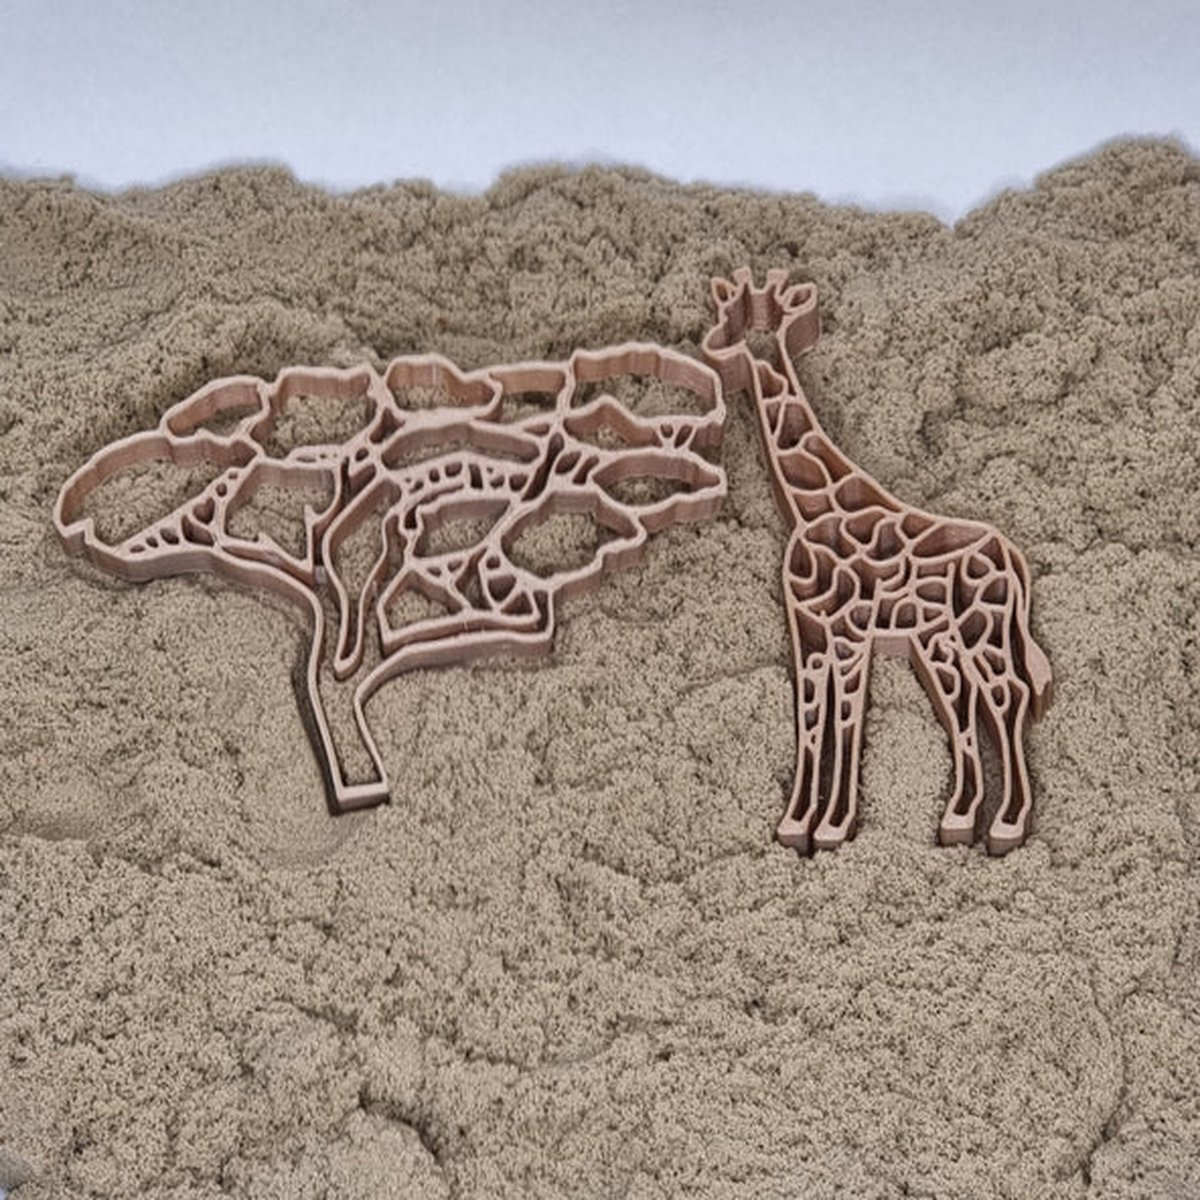 Grennn uitstekers boom en giraffe Afrika